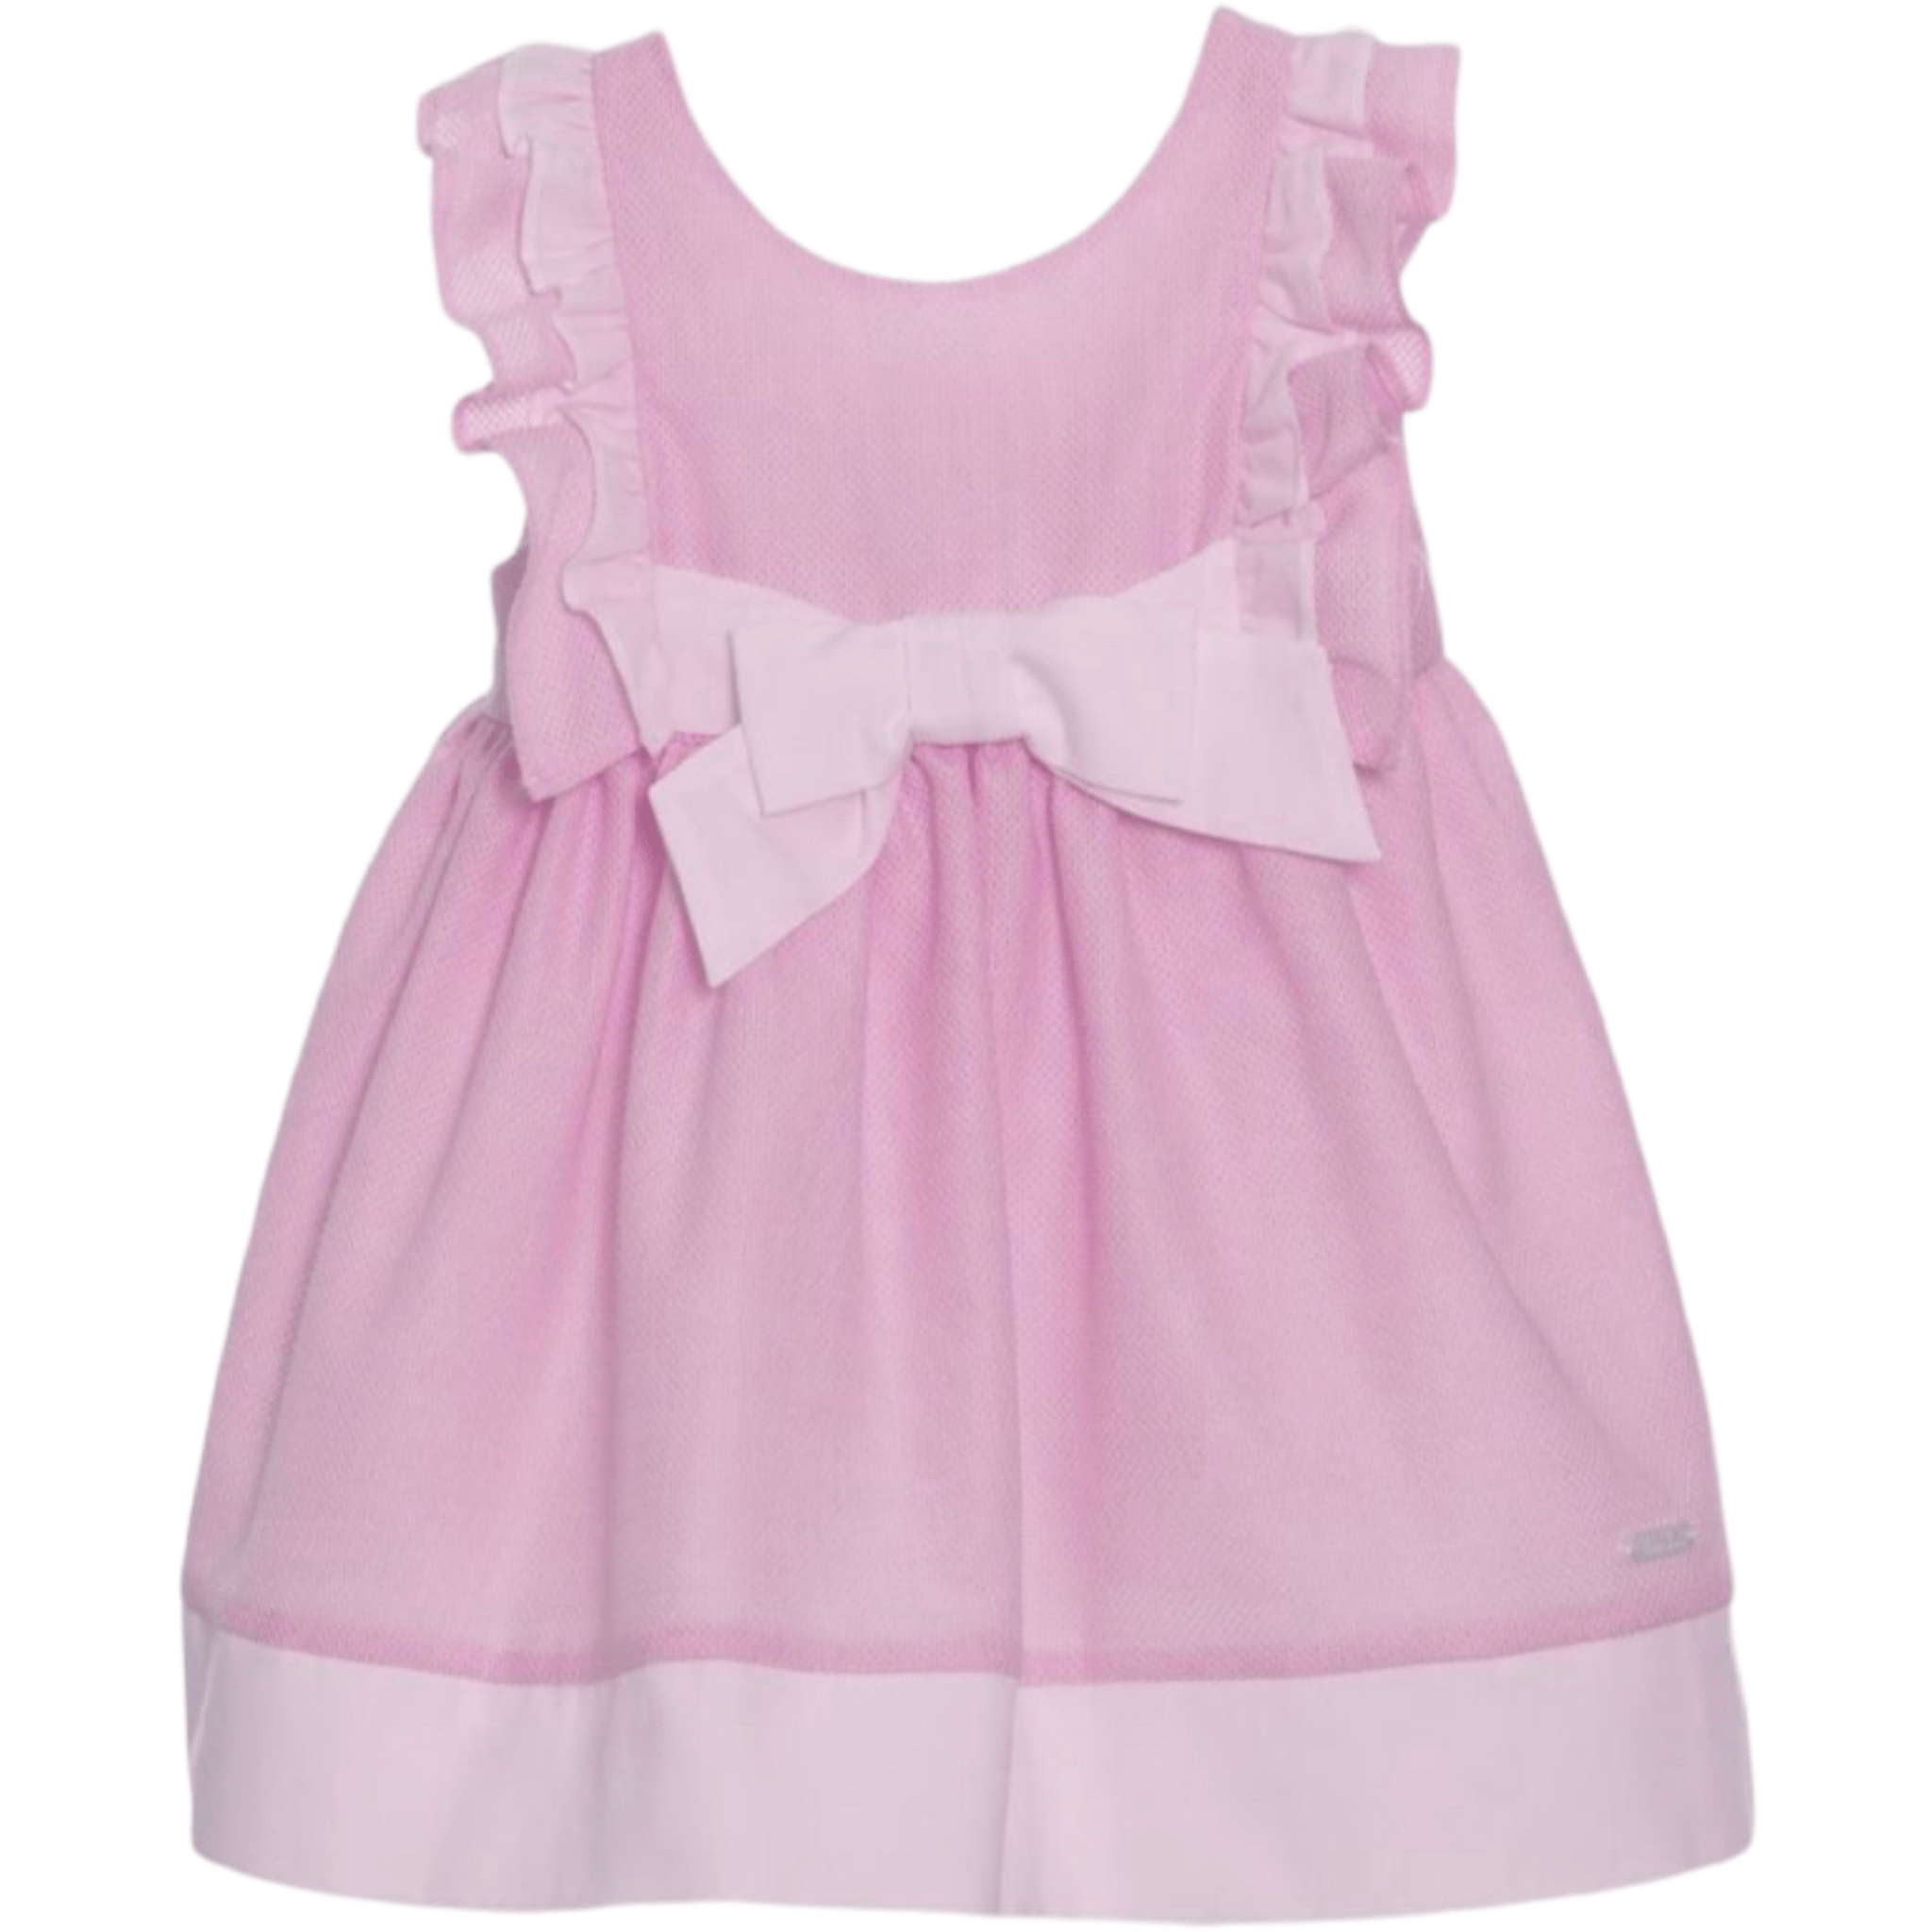 Patachou Tops Patachou Baby Girls Pink Bow Cotton Dress